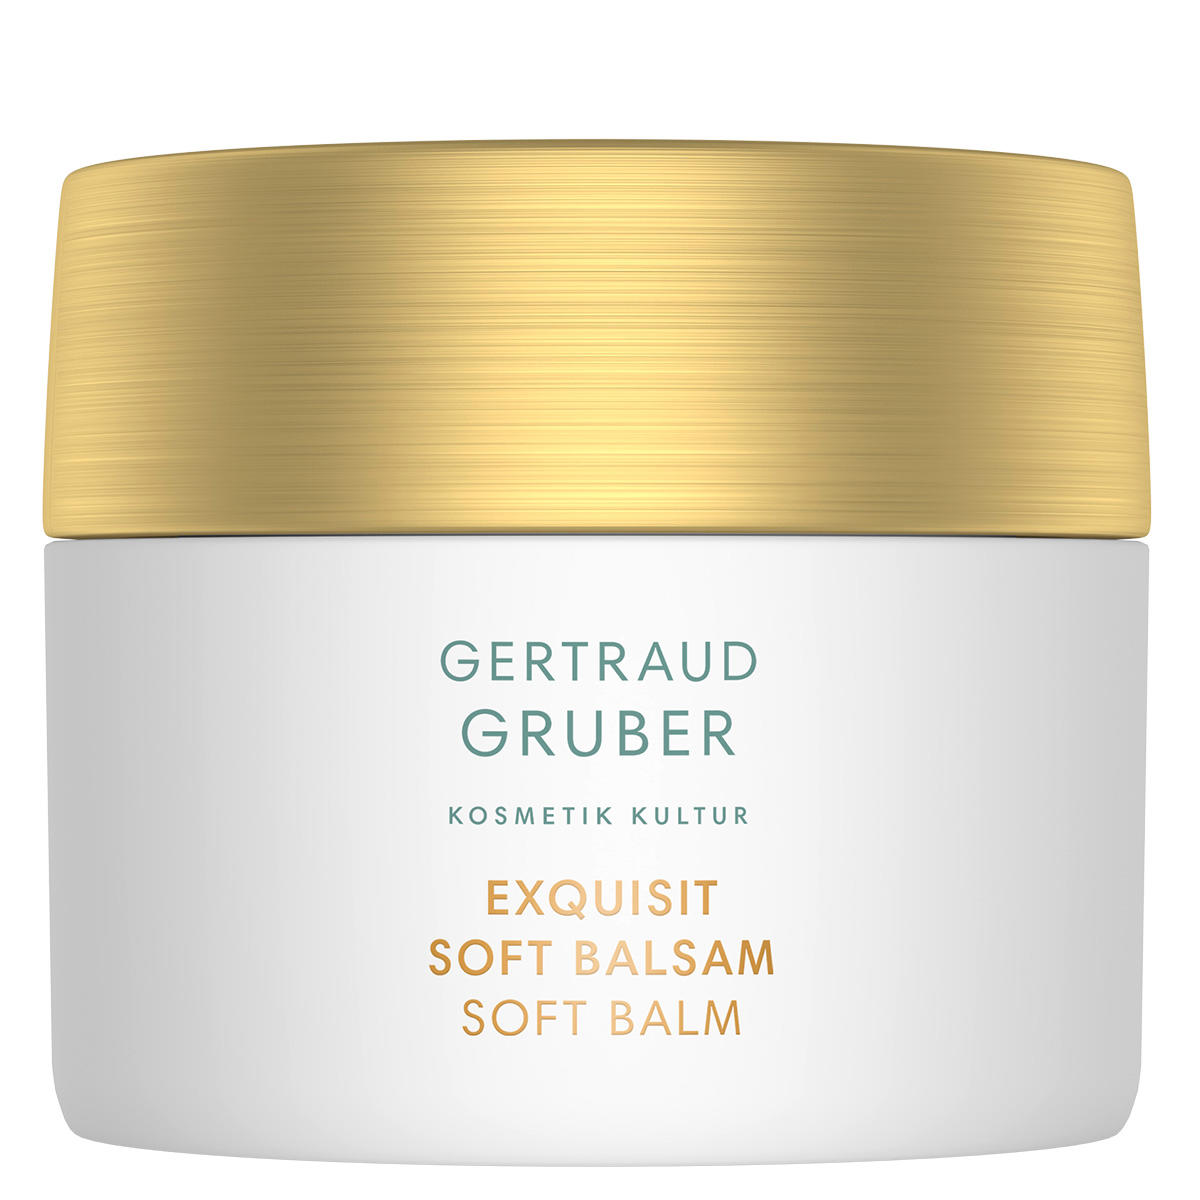 GERTRAUD GRUBER EXQUISIT Soft Balsam 50 ml - 1